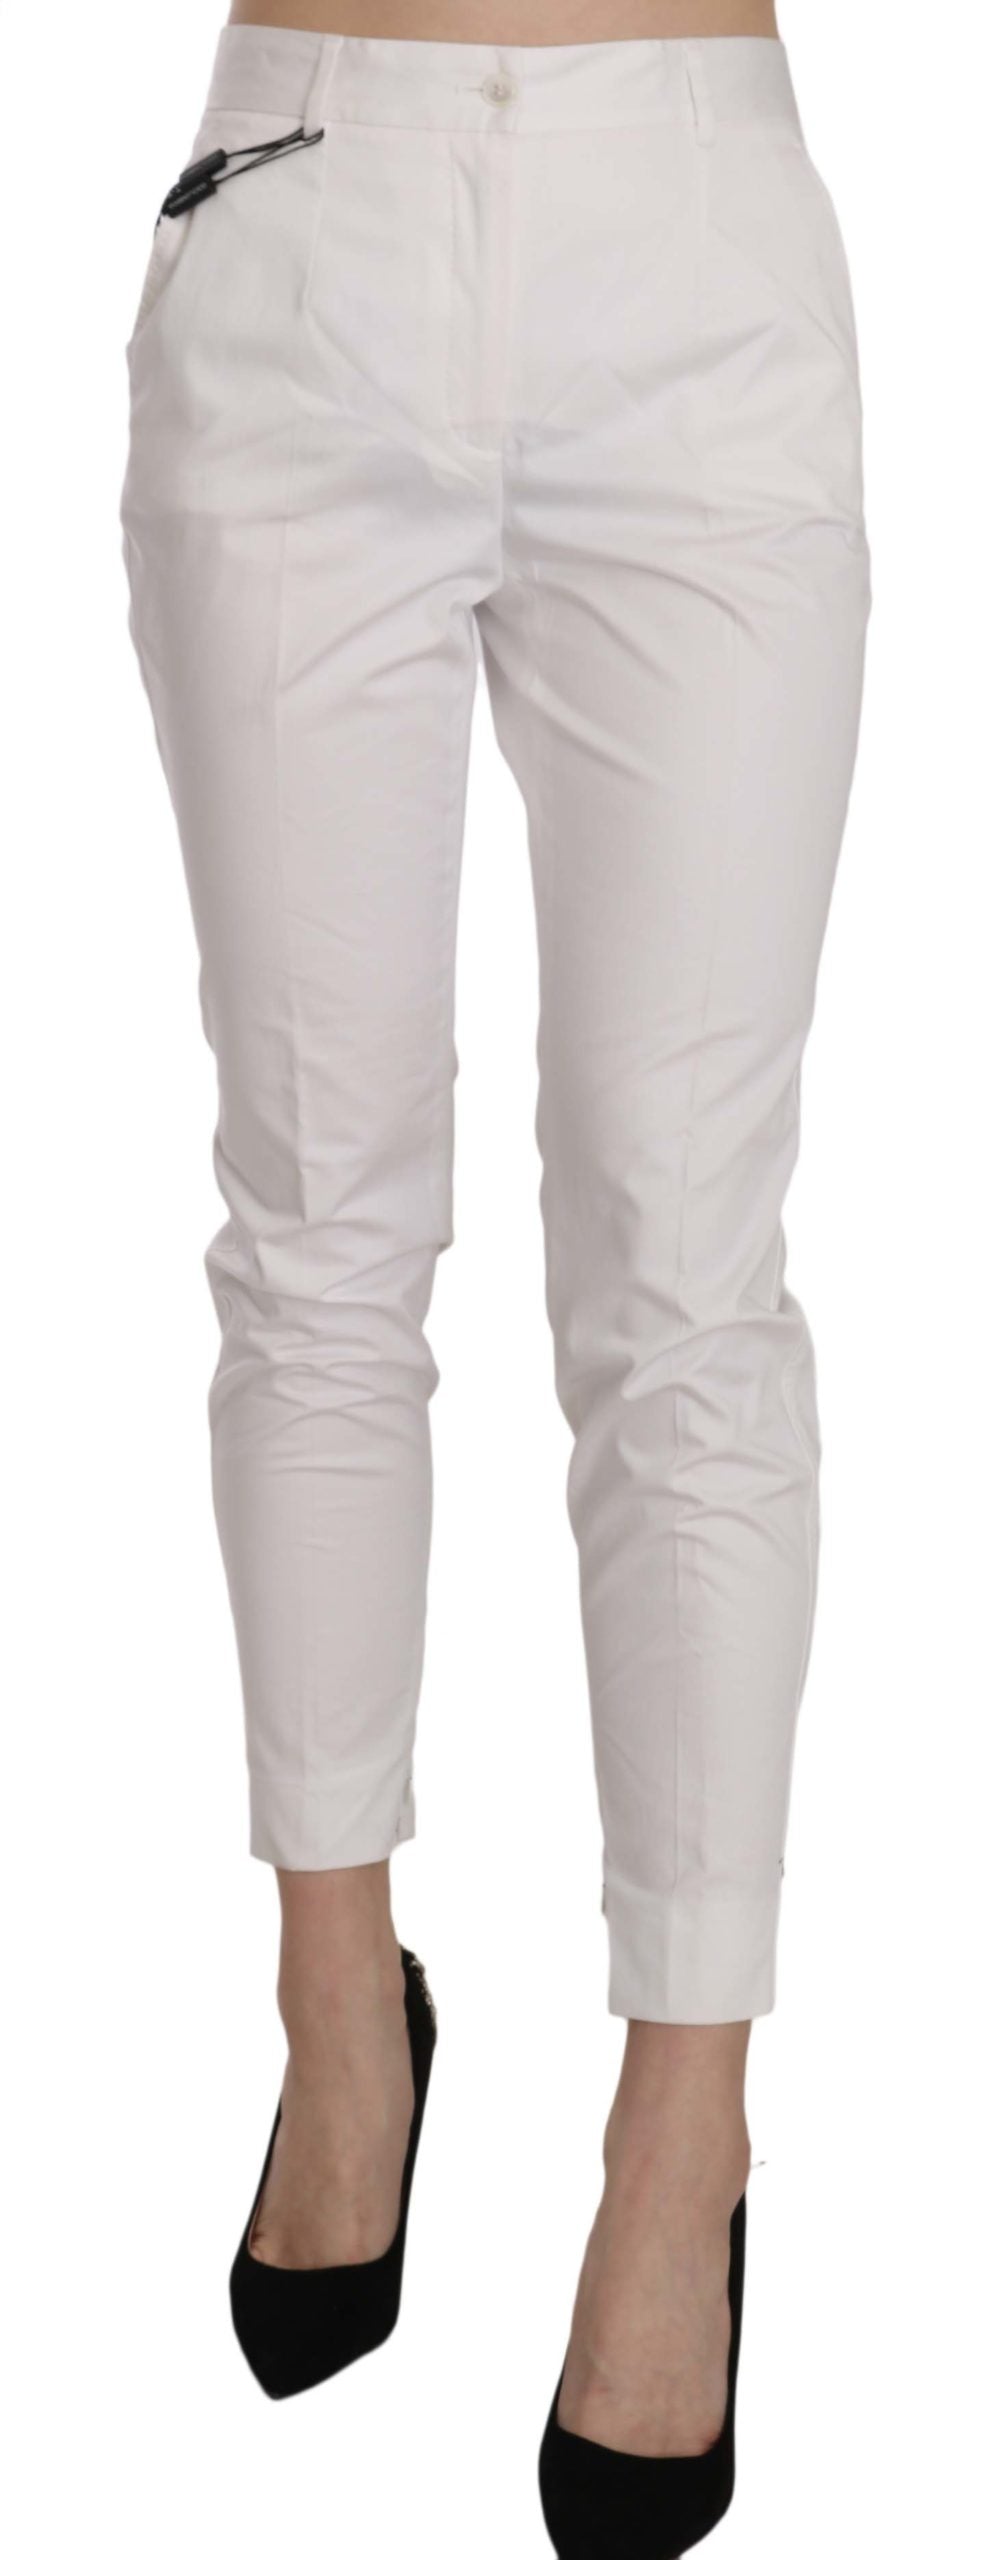 Elegant White Cotton Blend Trousers